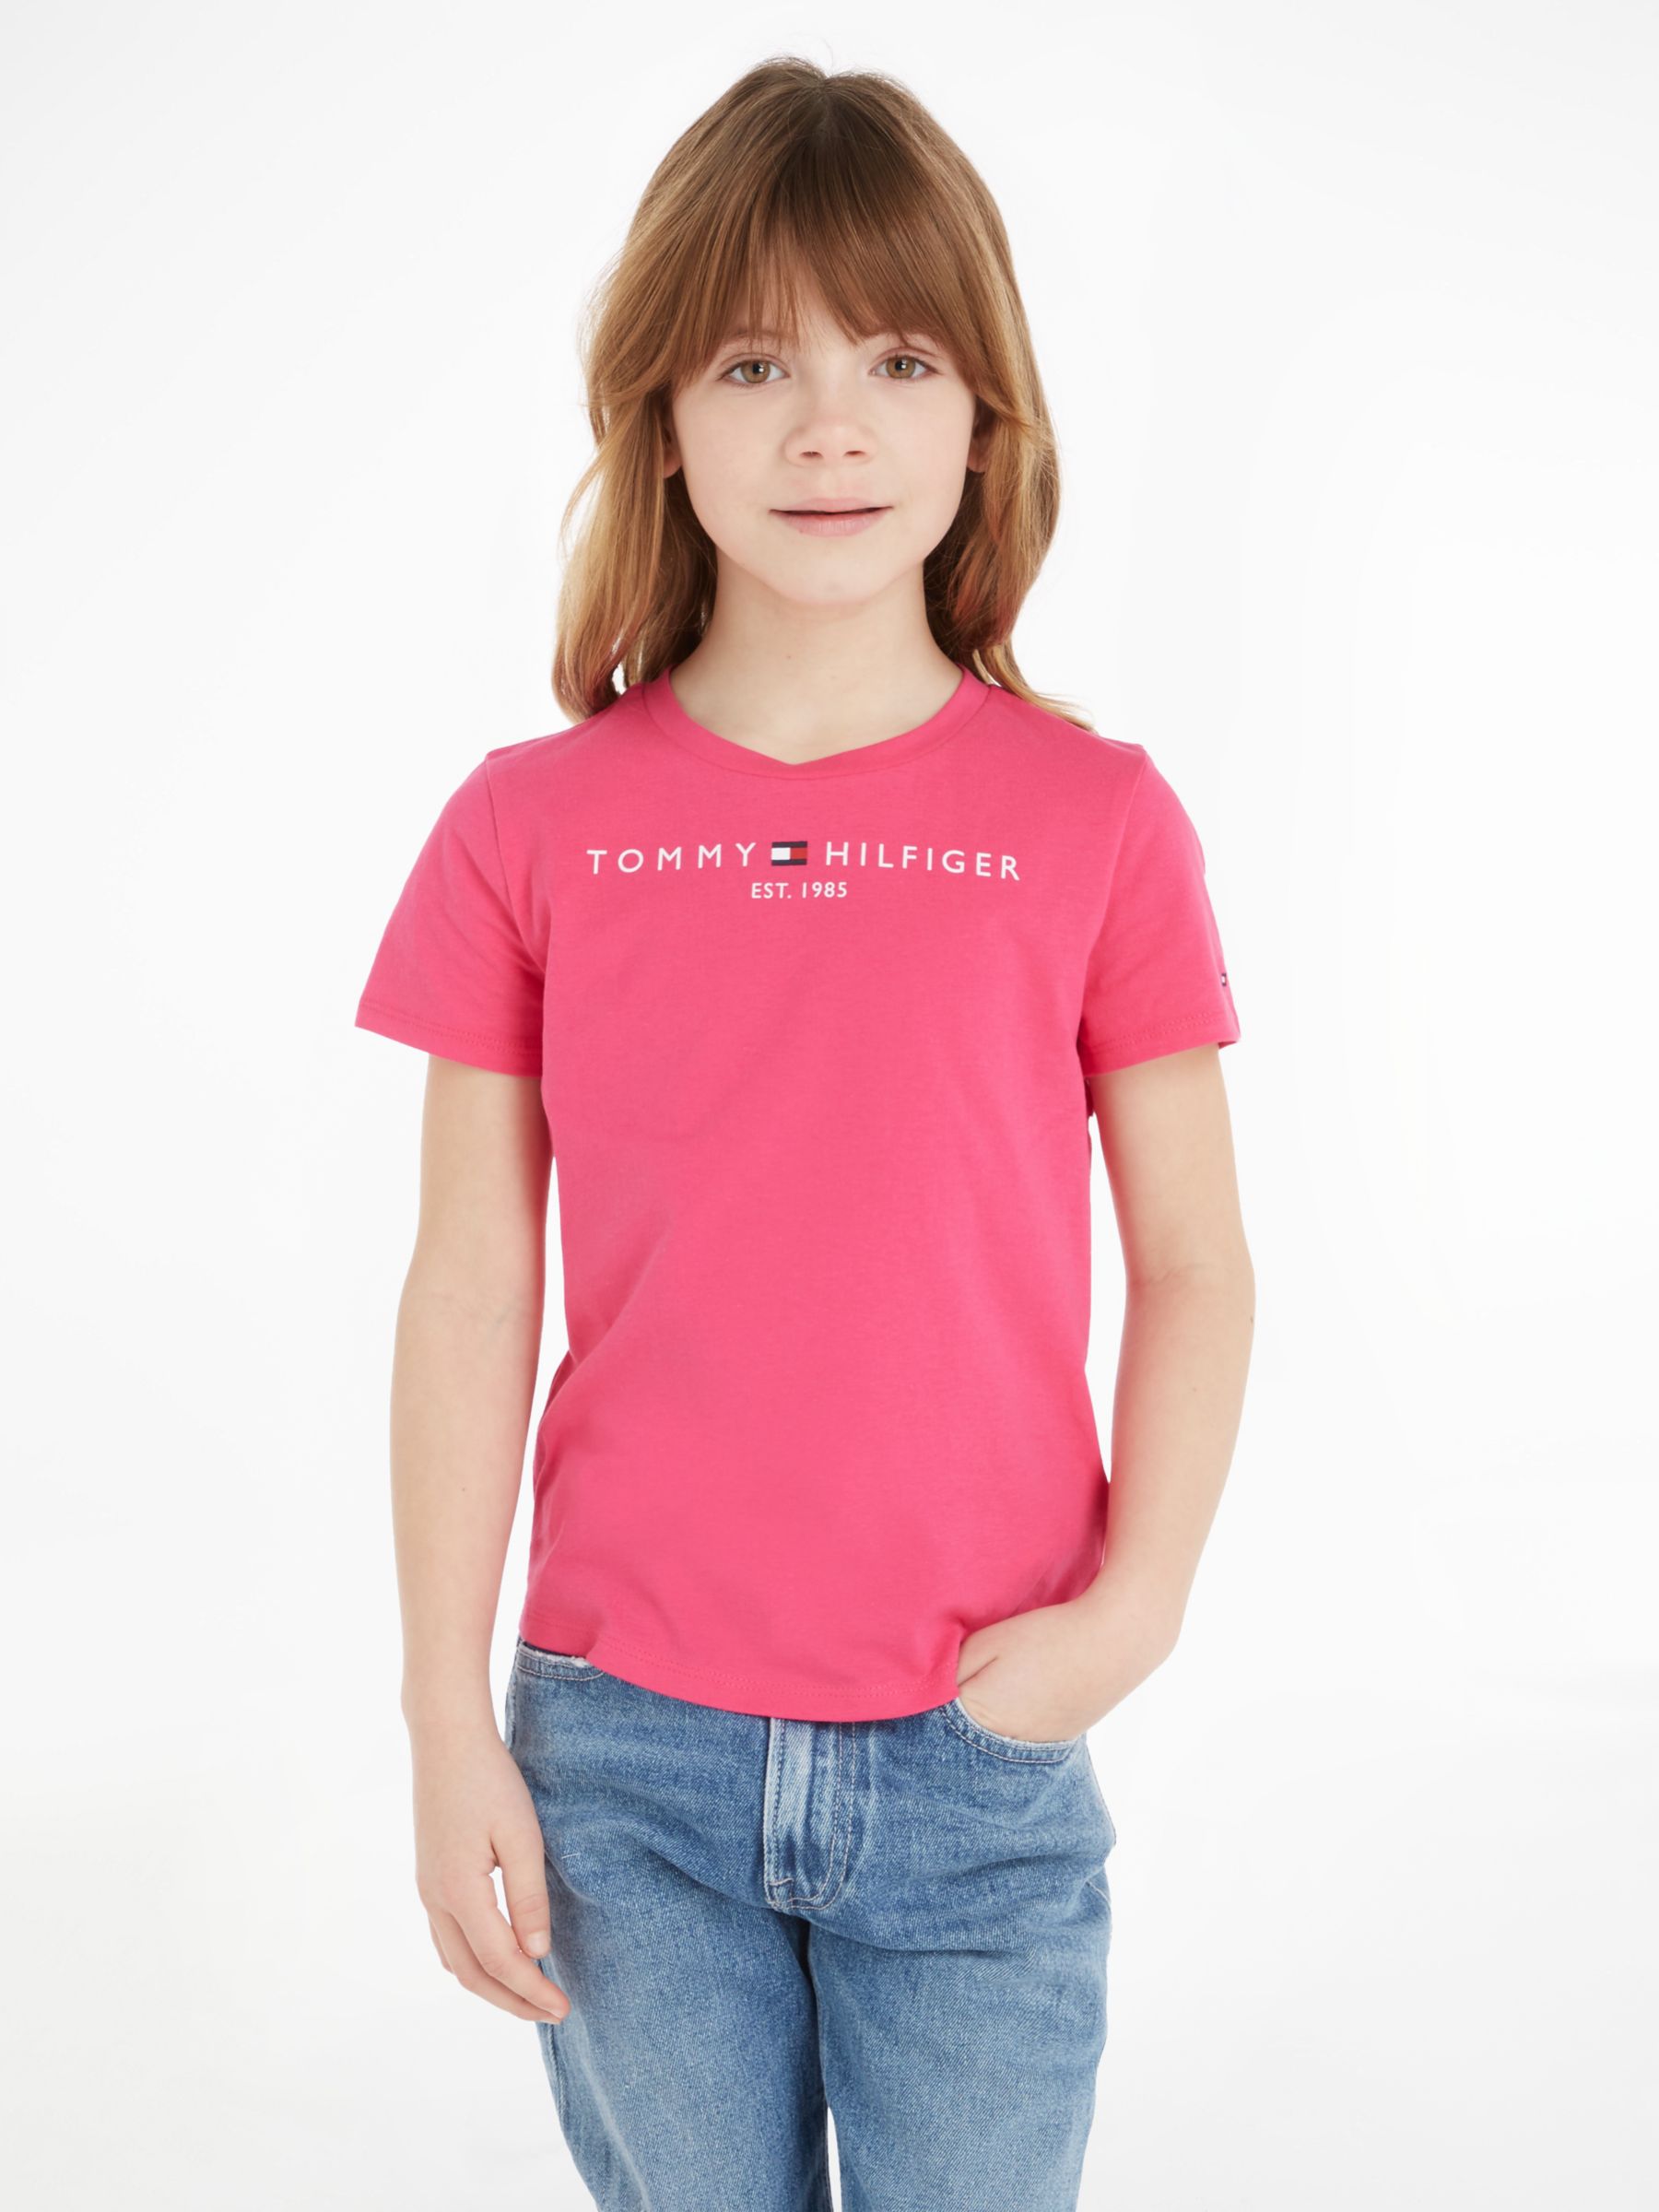 Tommy Hilfiger Kids\' Essential Short John Magenta Hot Partners Sleeve Lewis T-Shirt, at 